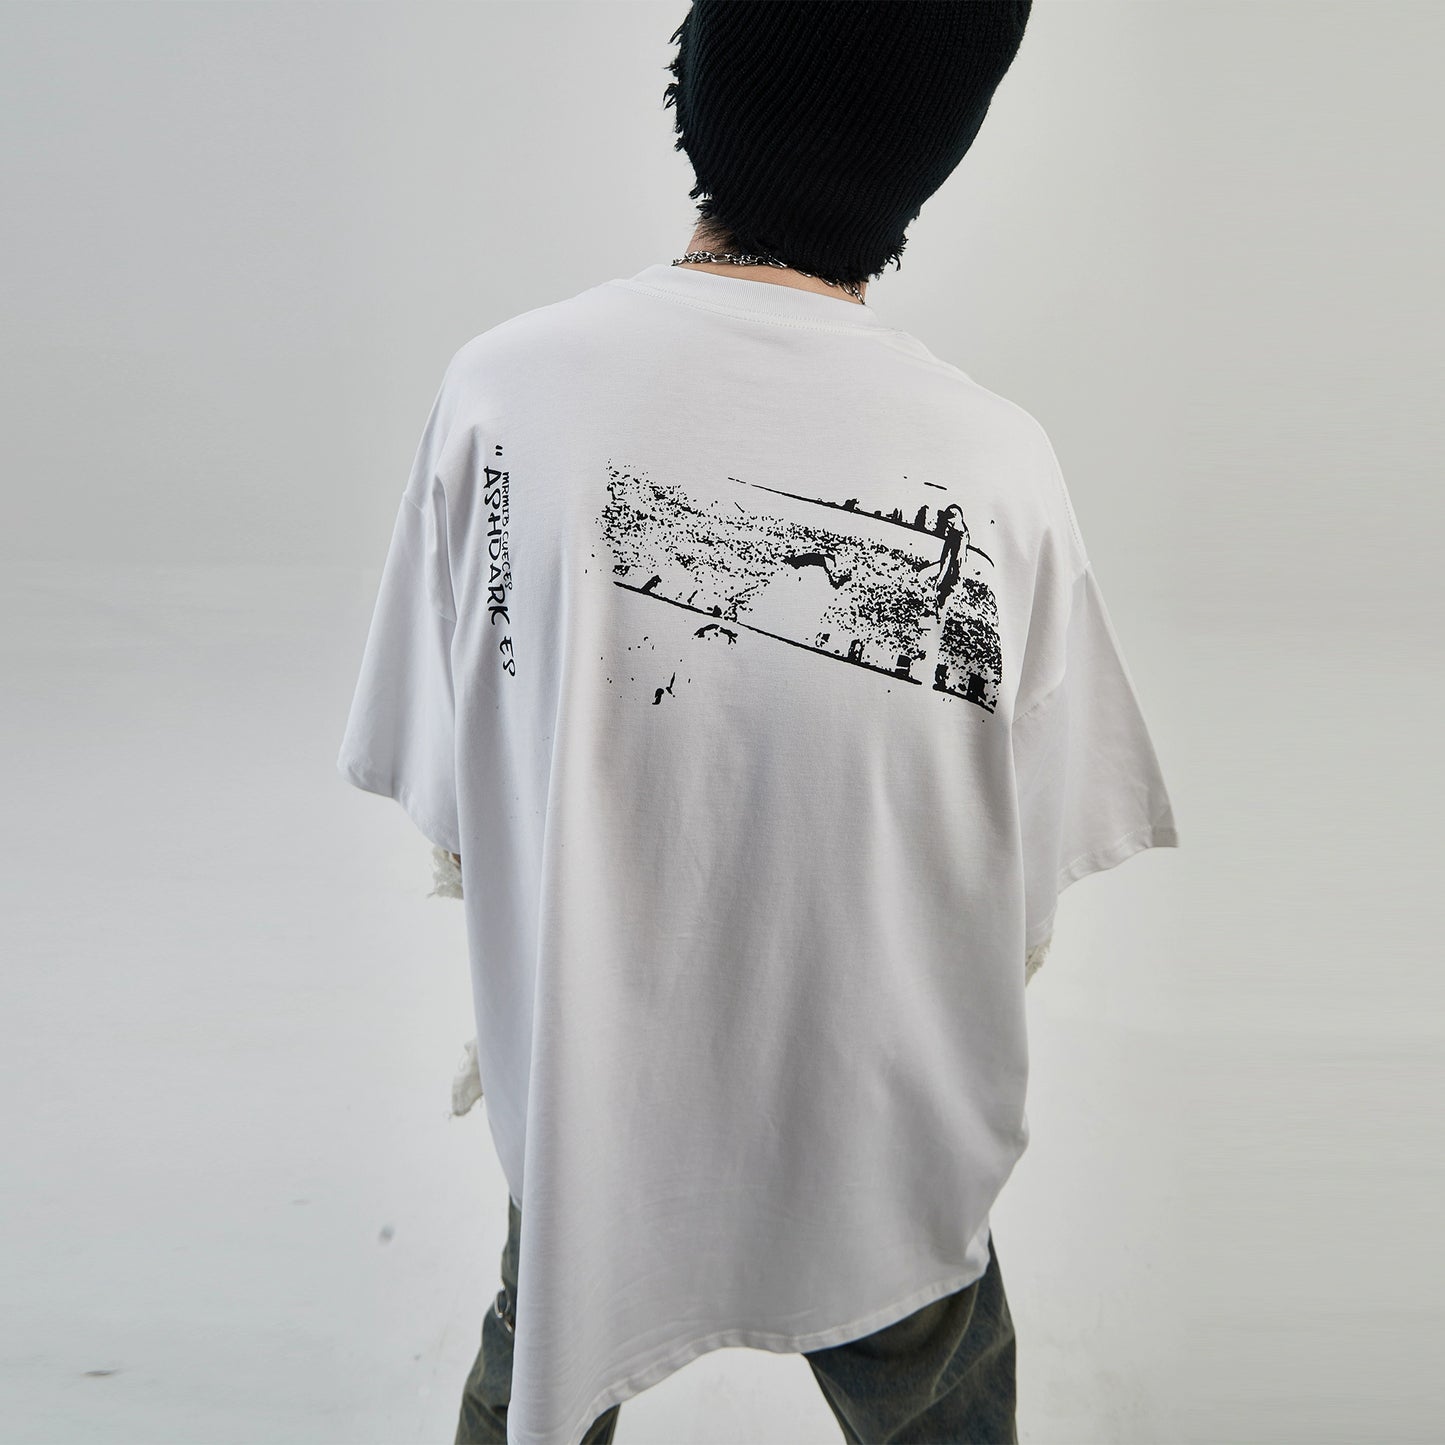 Graffiti Print Short Sleeve T-Shirt WN6318